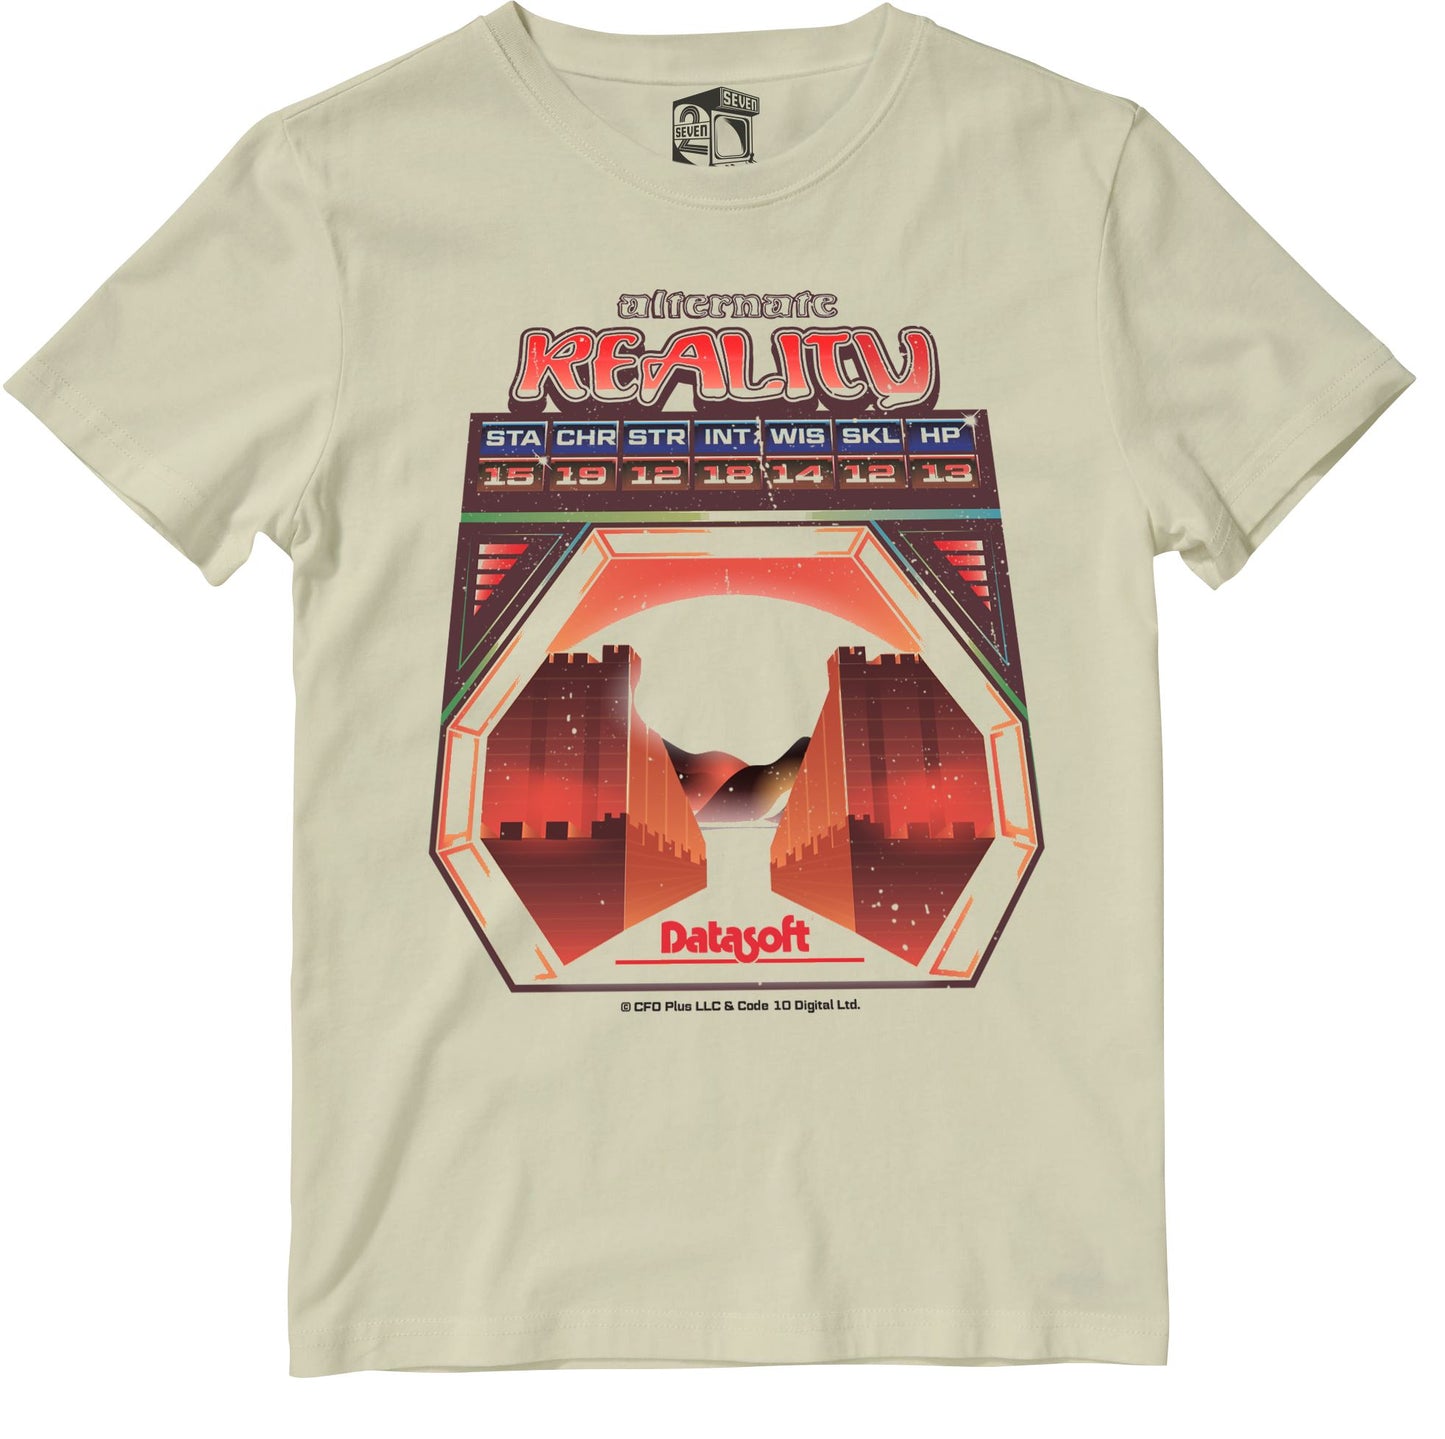 Alternate Reality Retro Gaming T-Shirt T-Shirt Seven Squared 